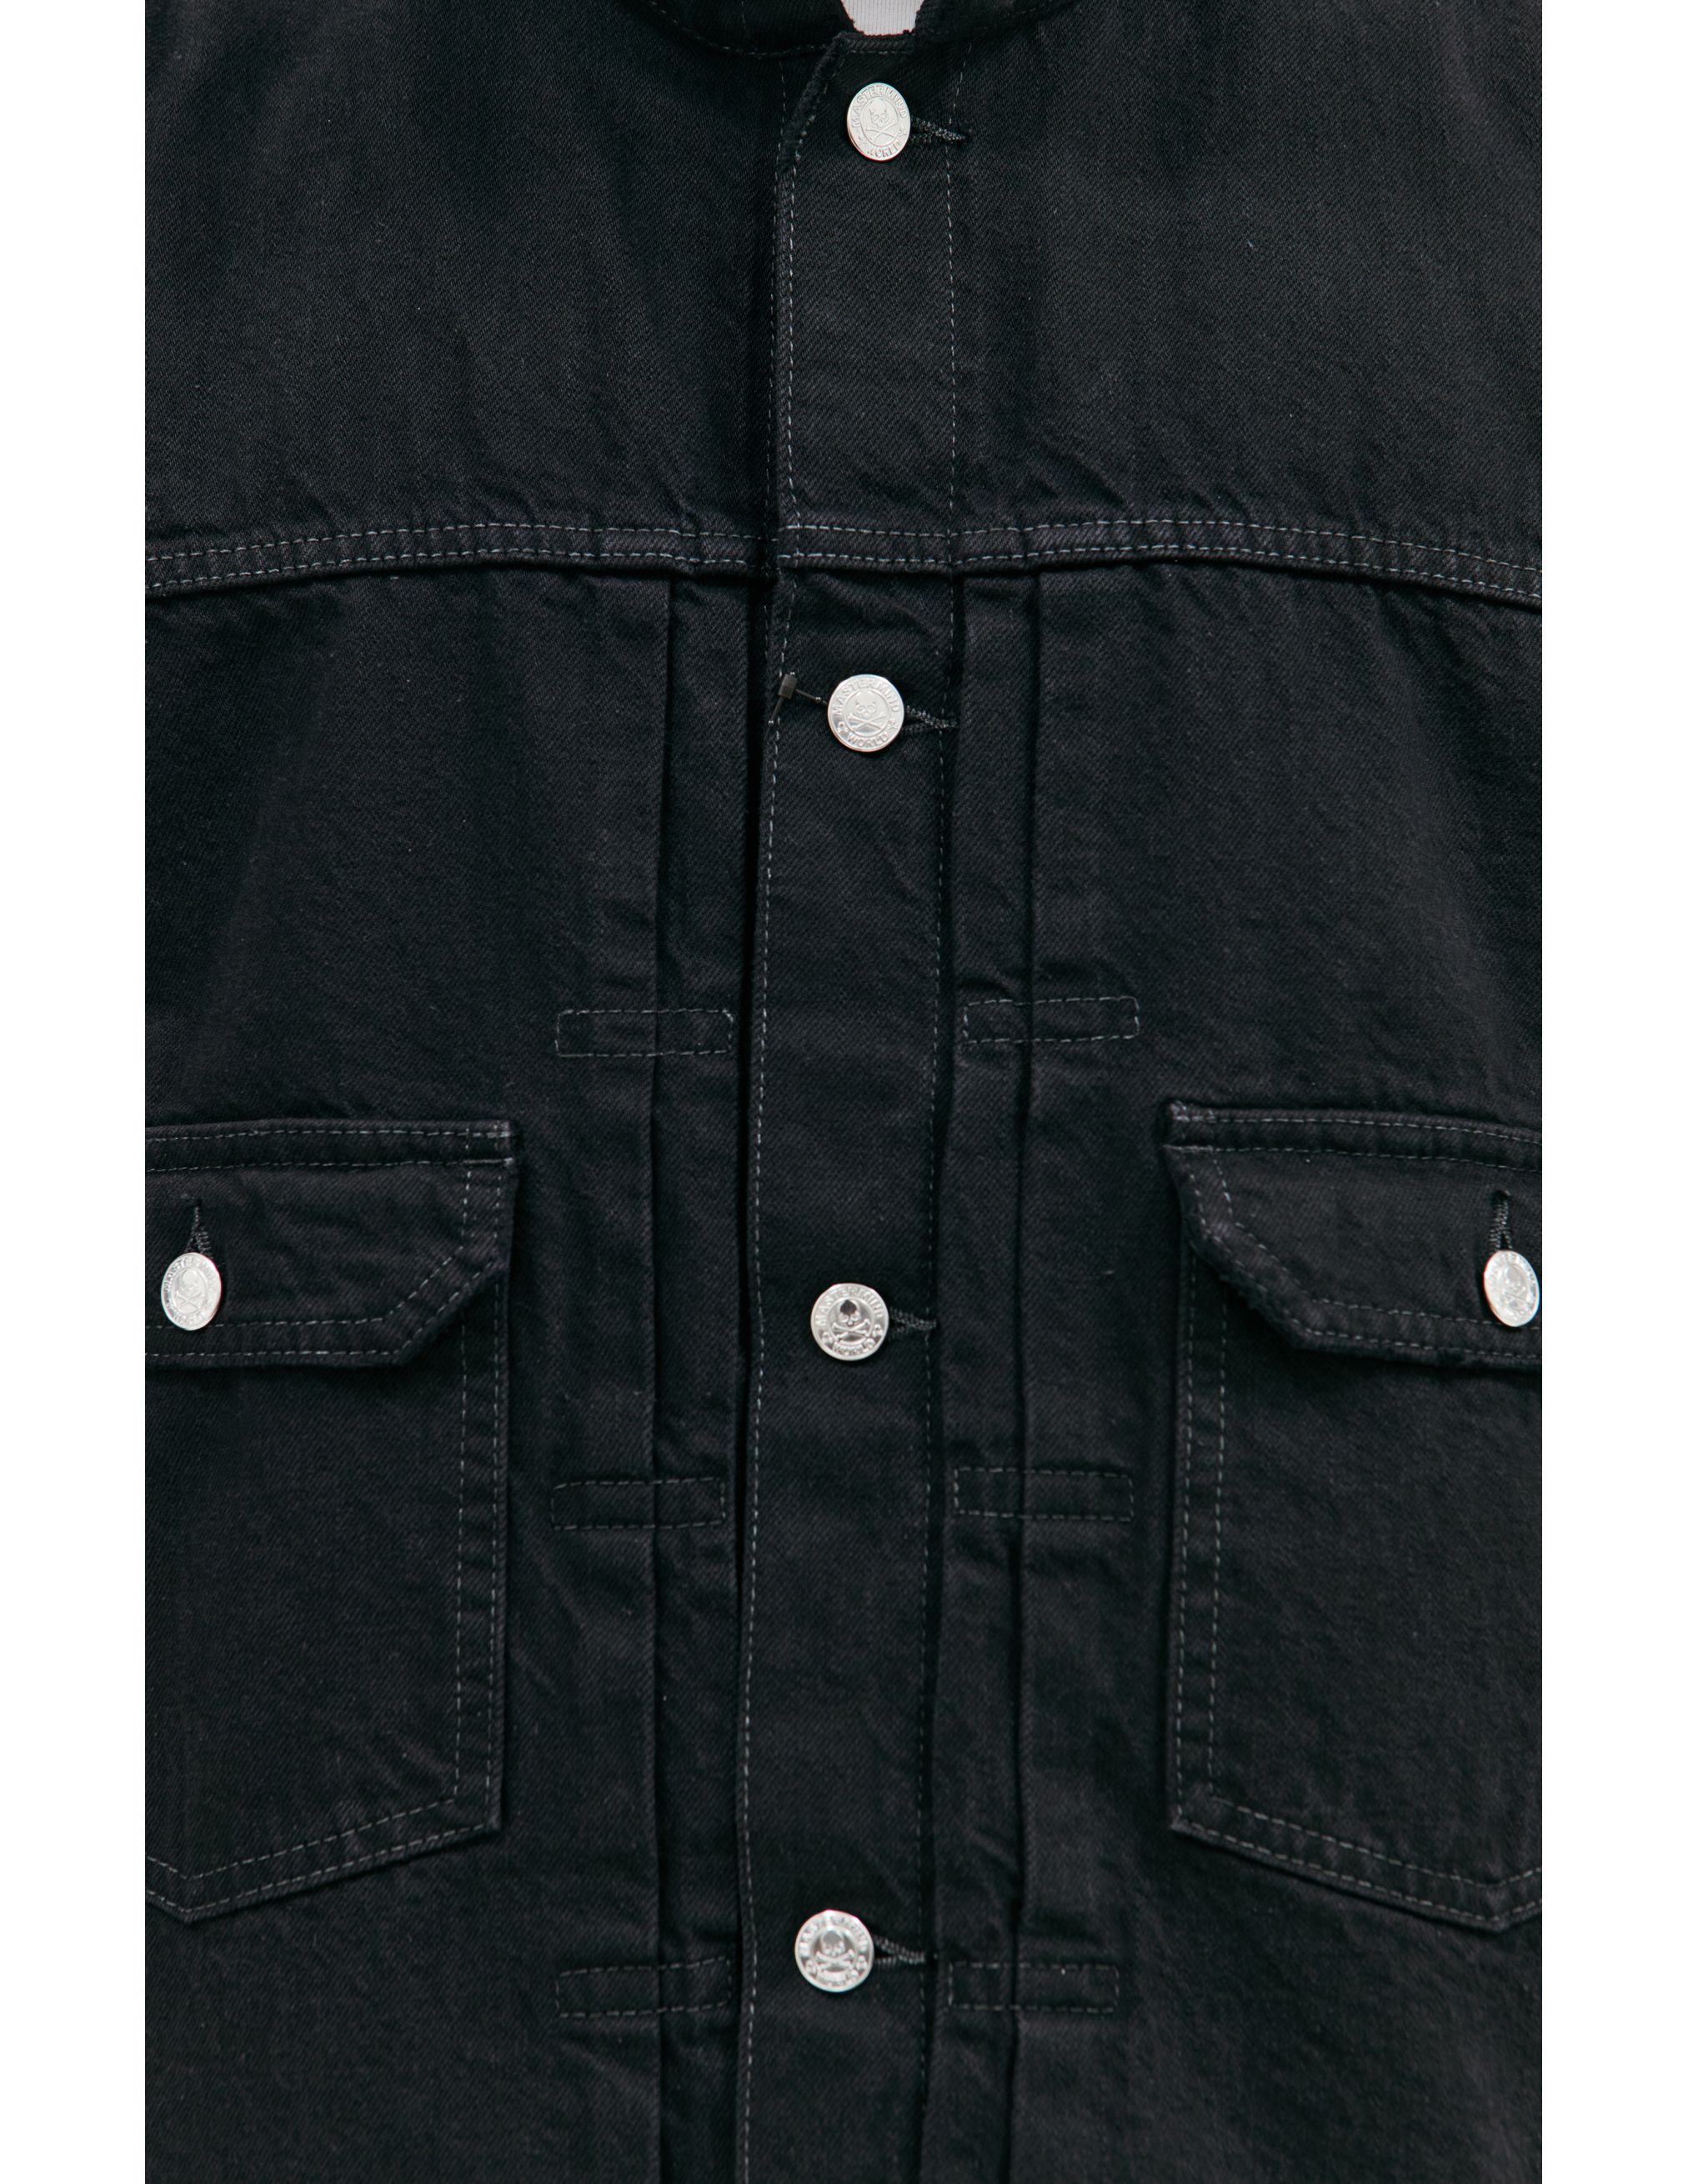 Джинсовая куртка с капюшоном Mastermind WORLD MW24S12-BL002-018, размер L - фото 6